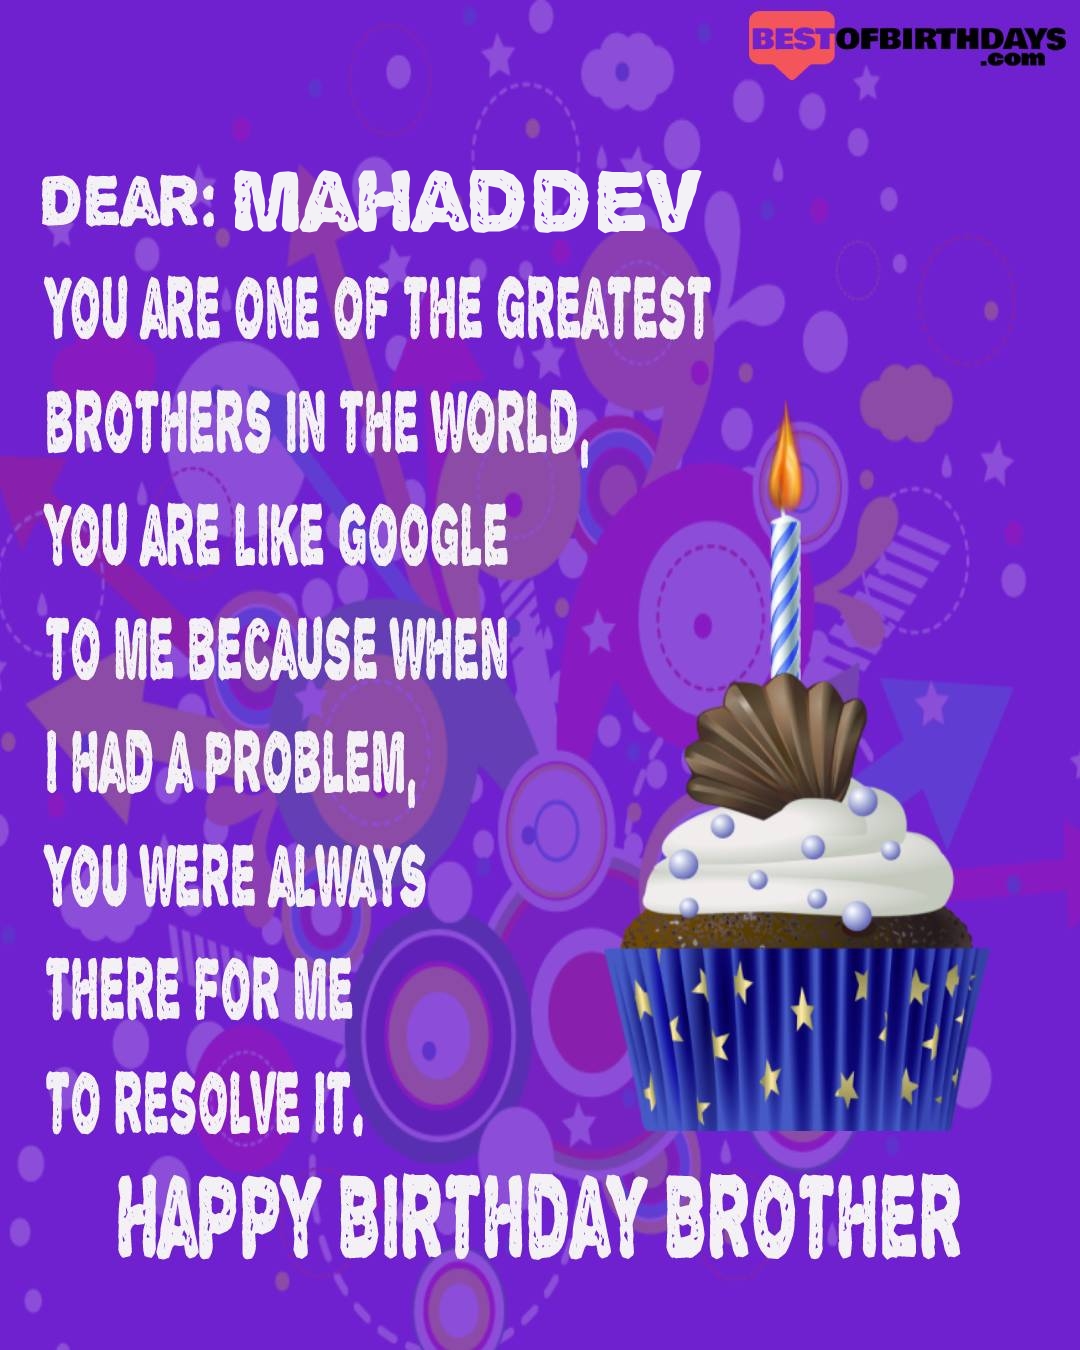 Happy birthday mahaddev bhai brother bro